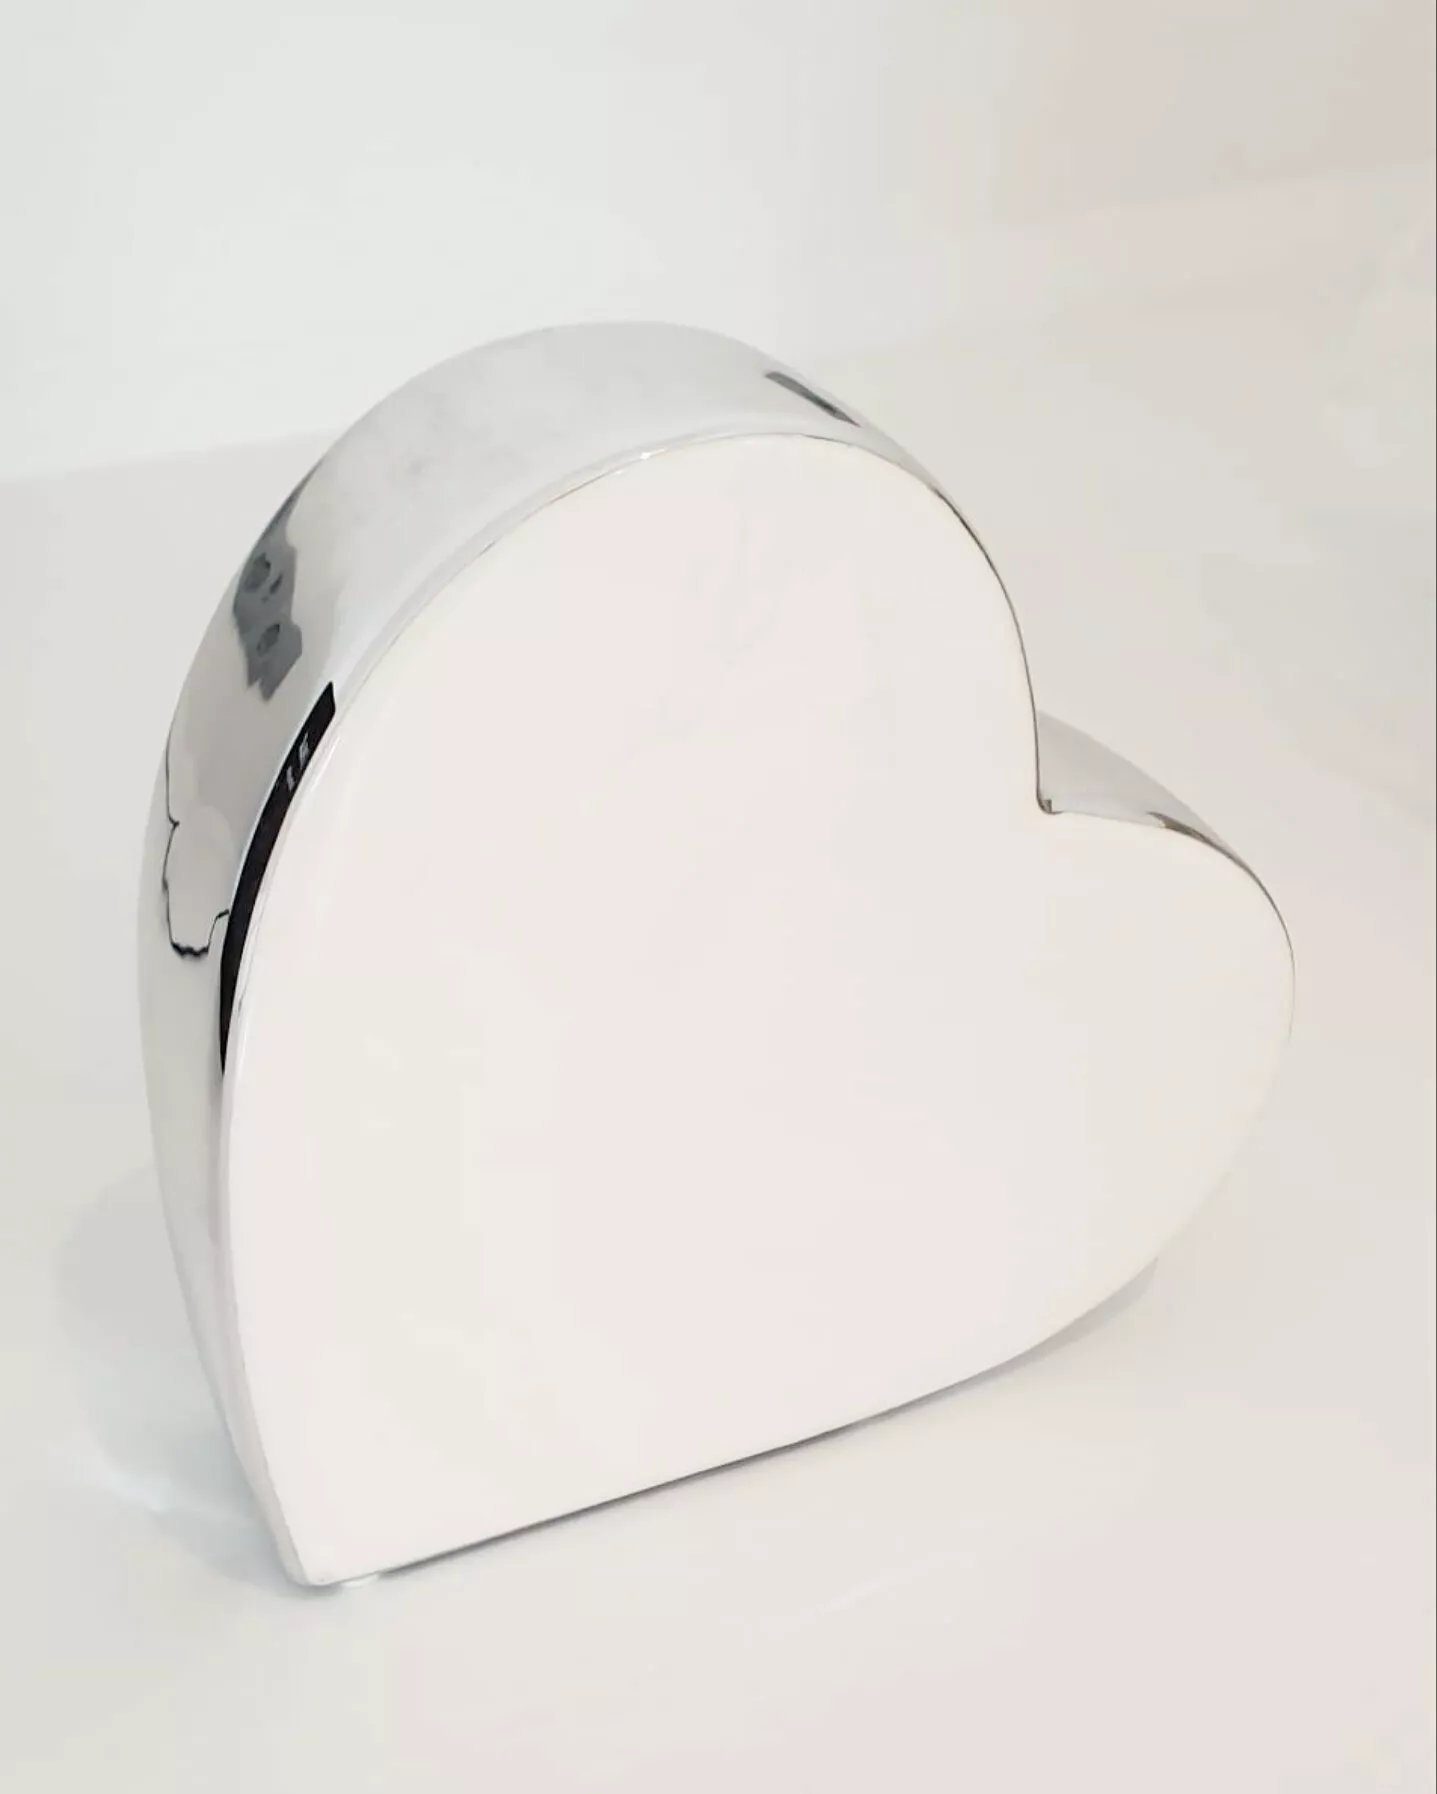 silber/chrome, weiß Deko 5cm, Design x 18cm 17cm aus Porzellan x Home,Relax&Style Dekoobjekt Herz Herz